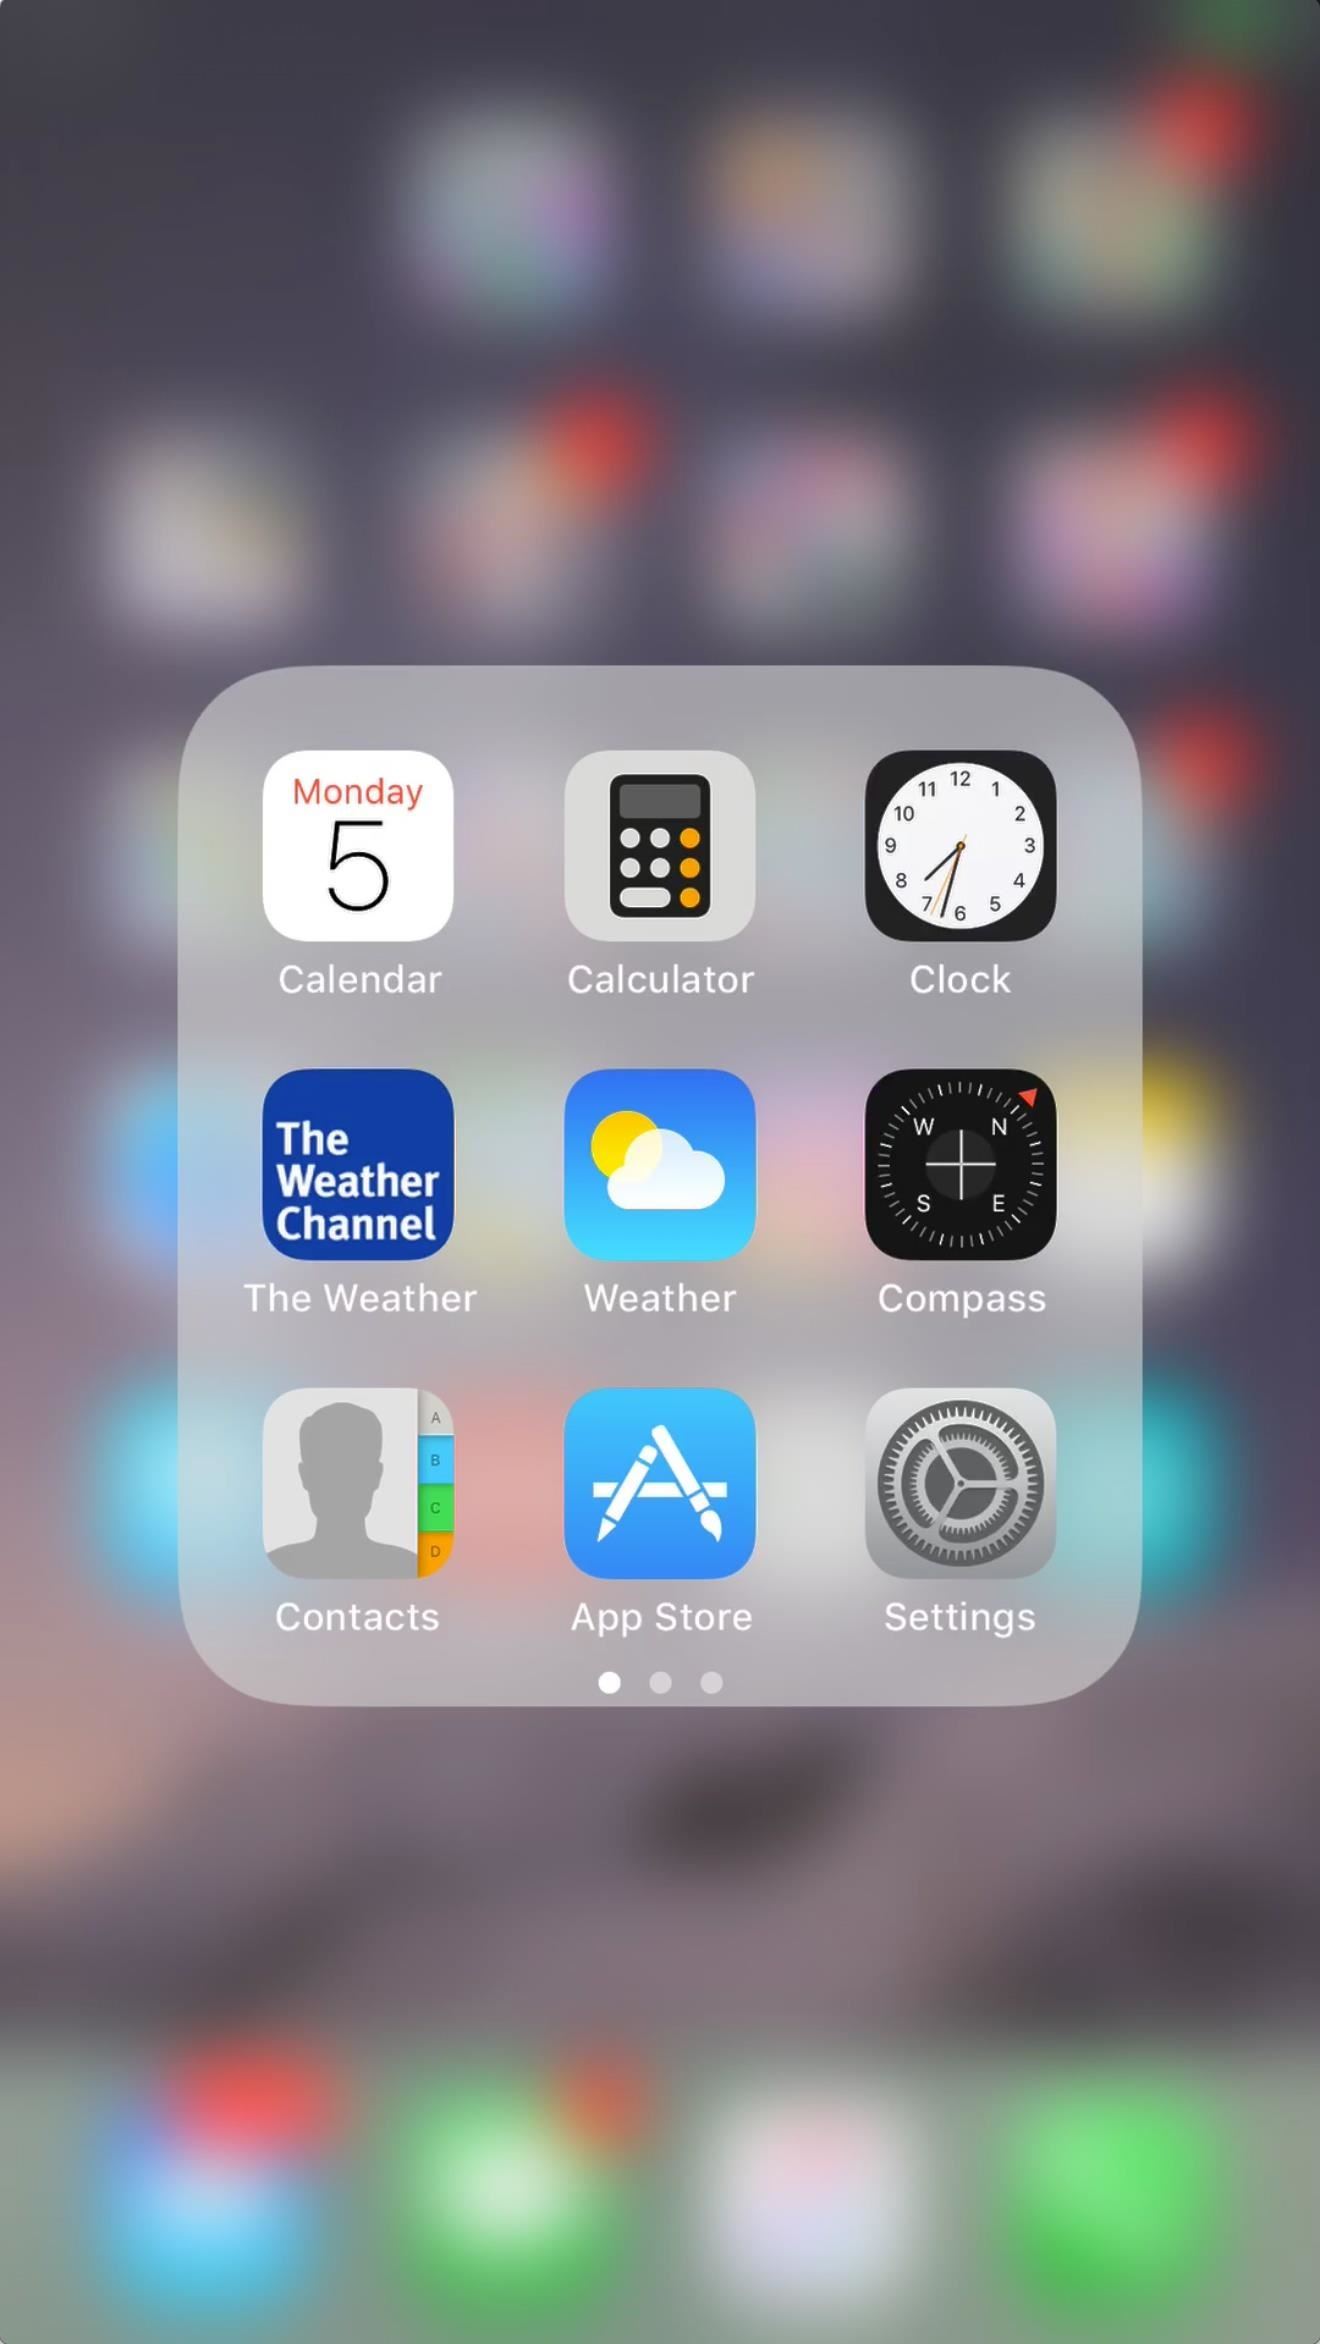 iOS 11 trás modo noturno finalmente ao iPhone, saiba como ativar 5